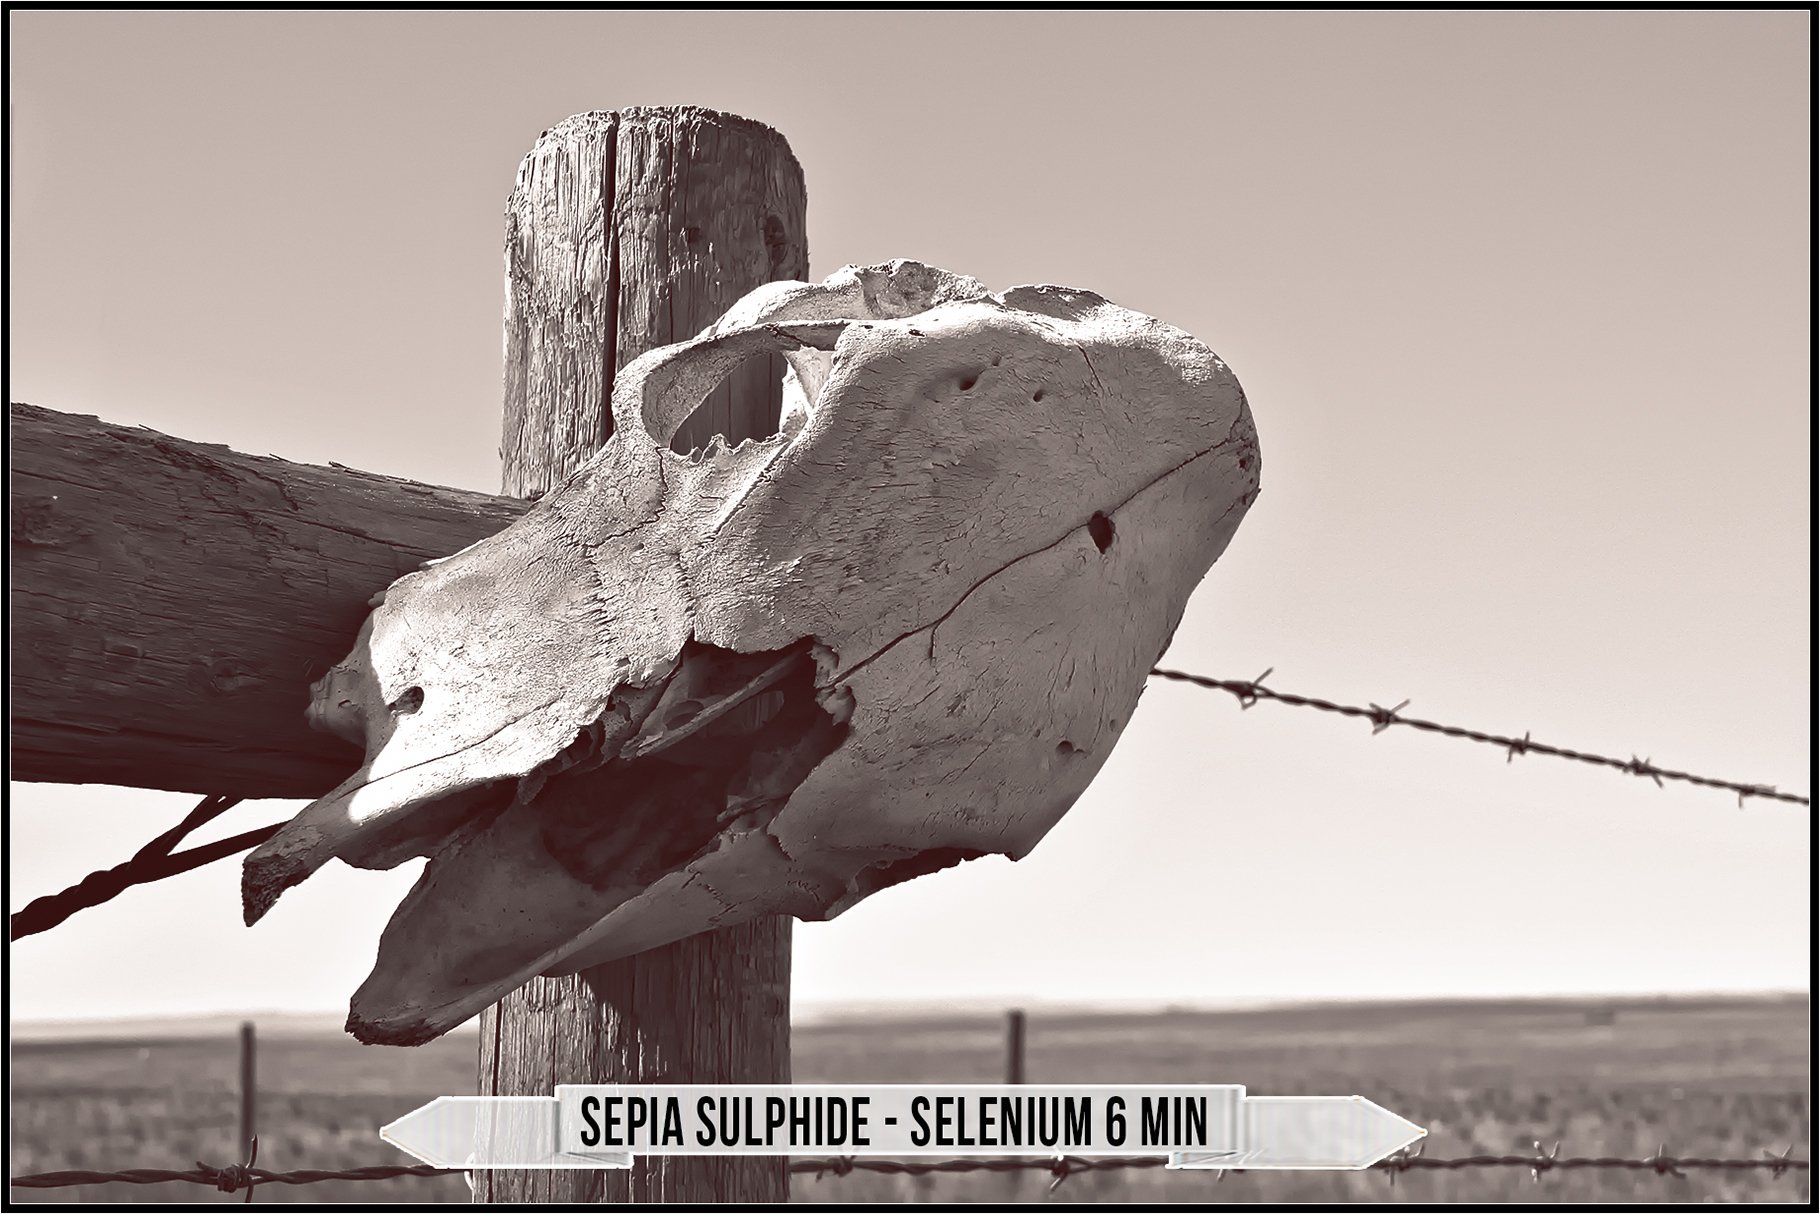 sepia sulphide selenium 6 min 17